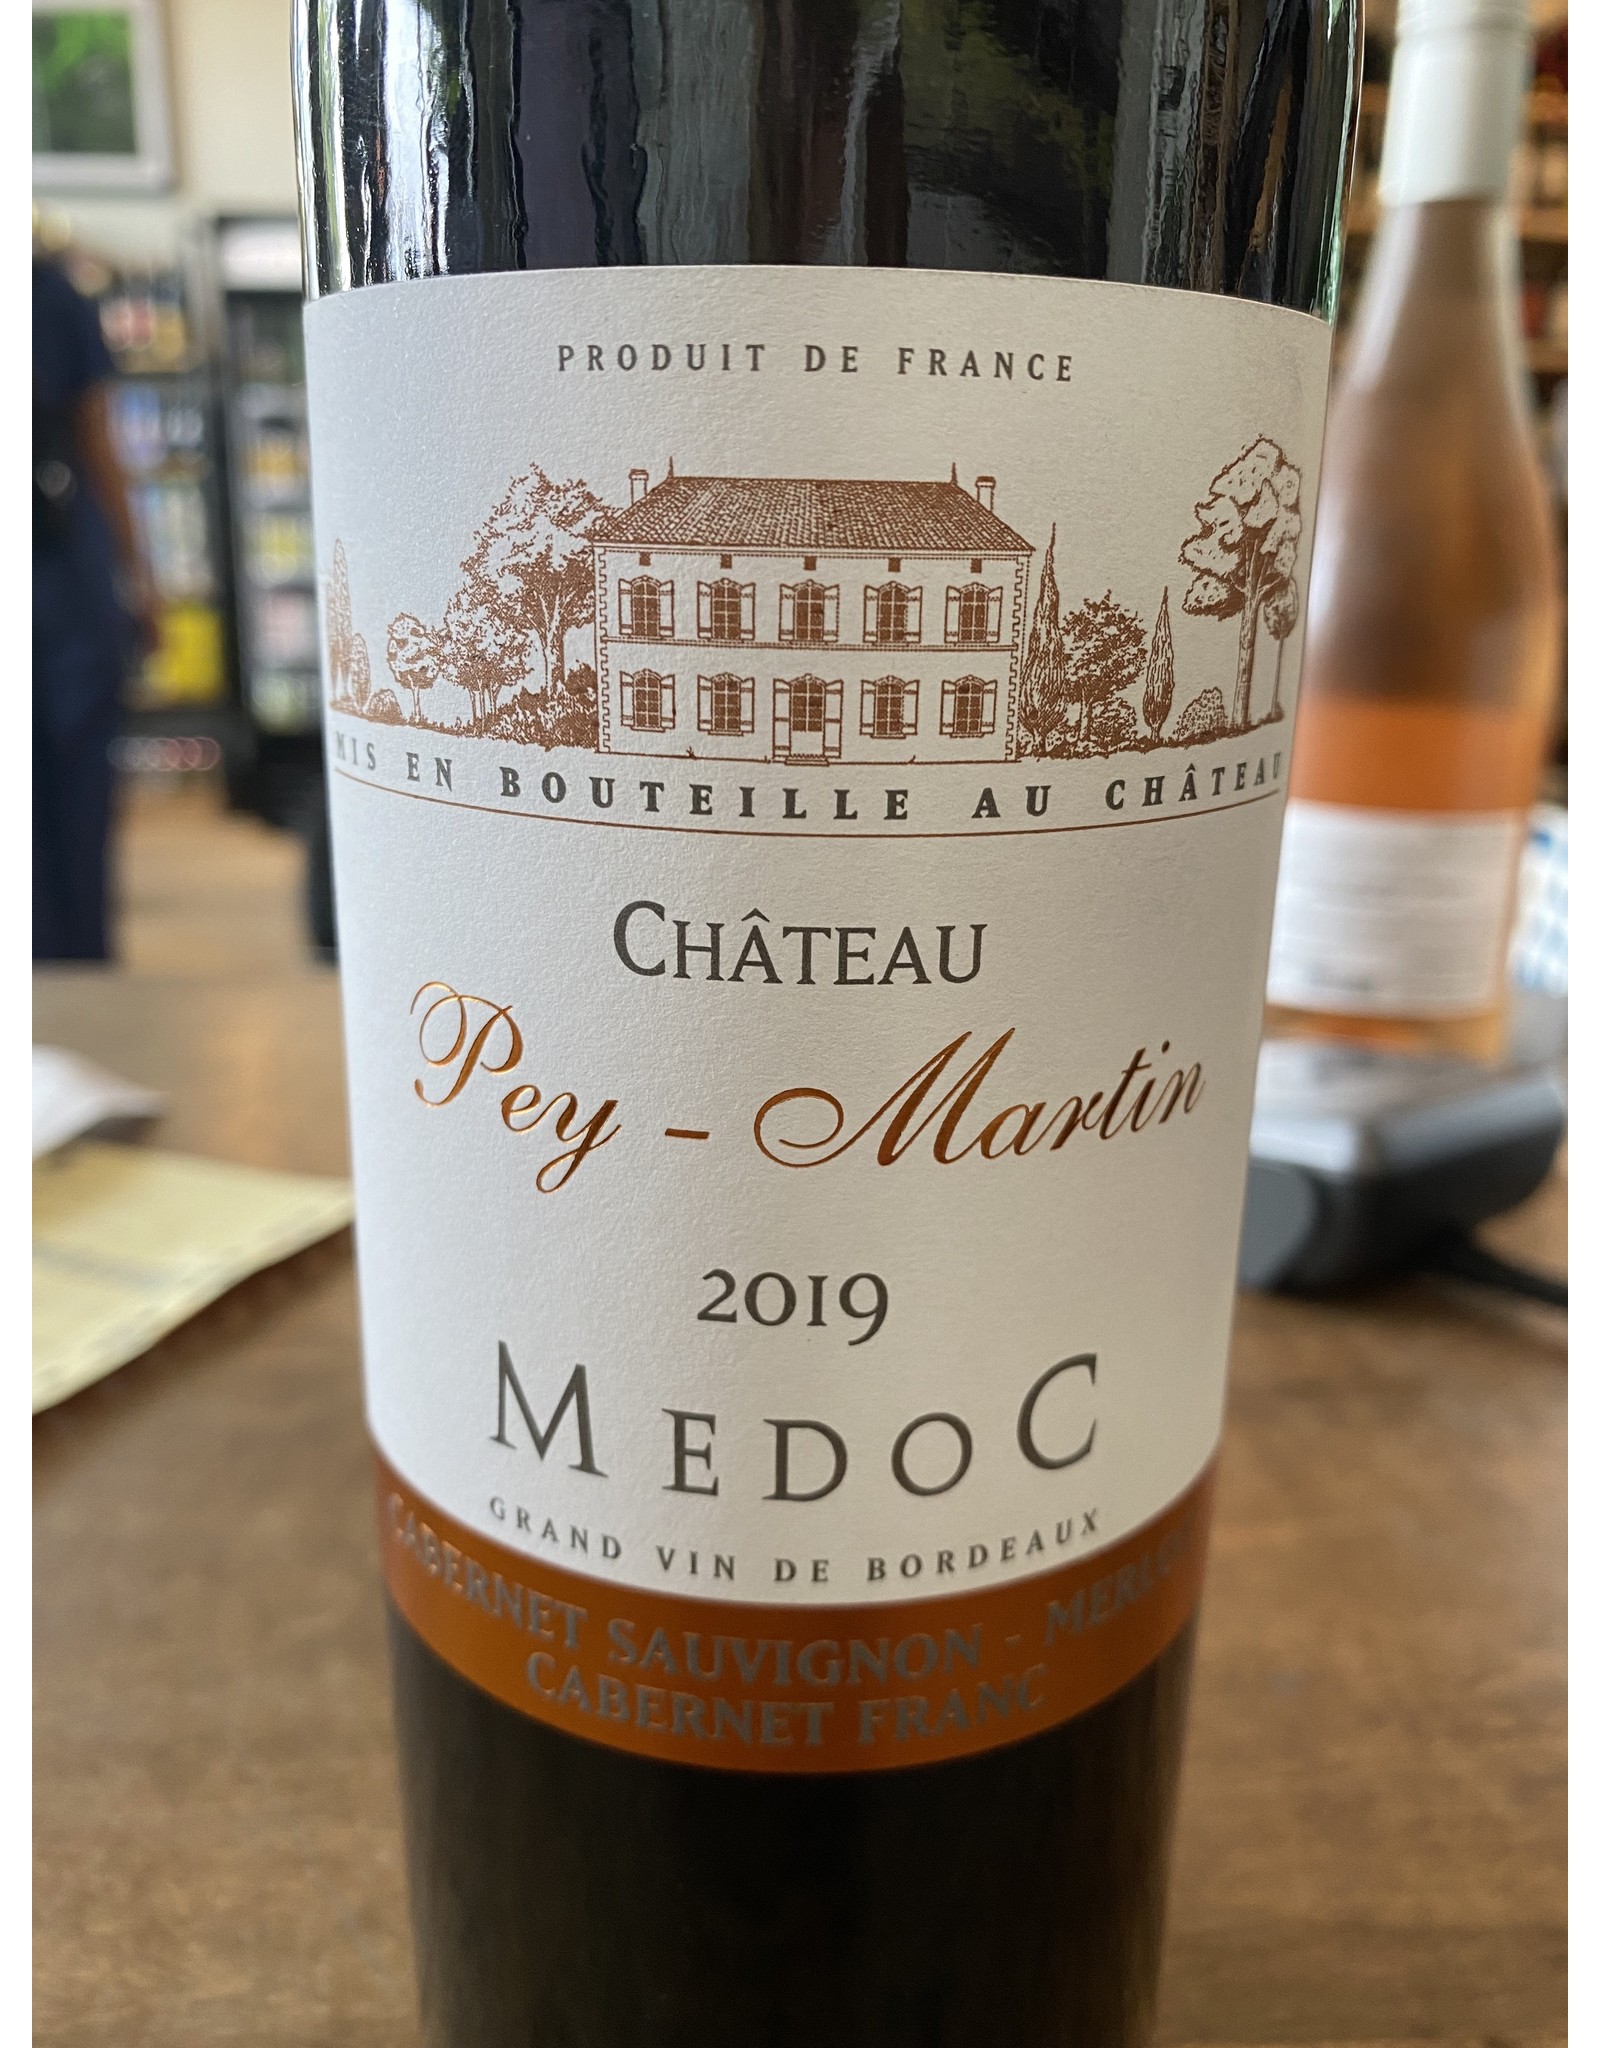 Chateau Pey-Martin Medoc 2019